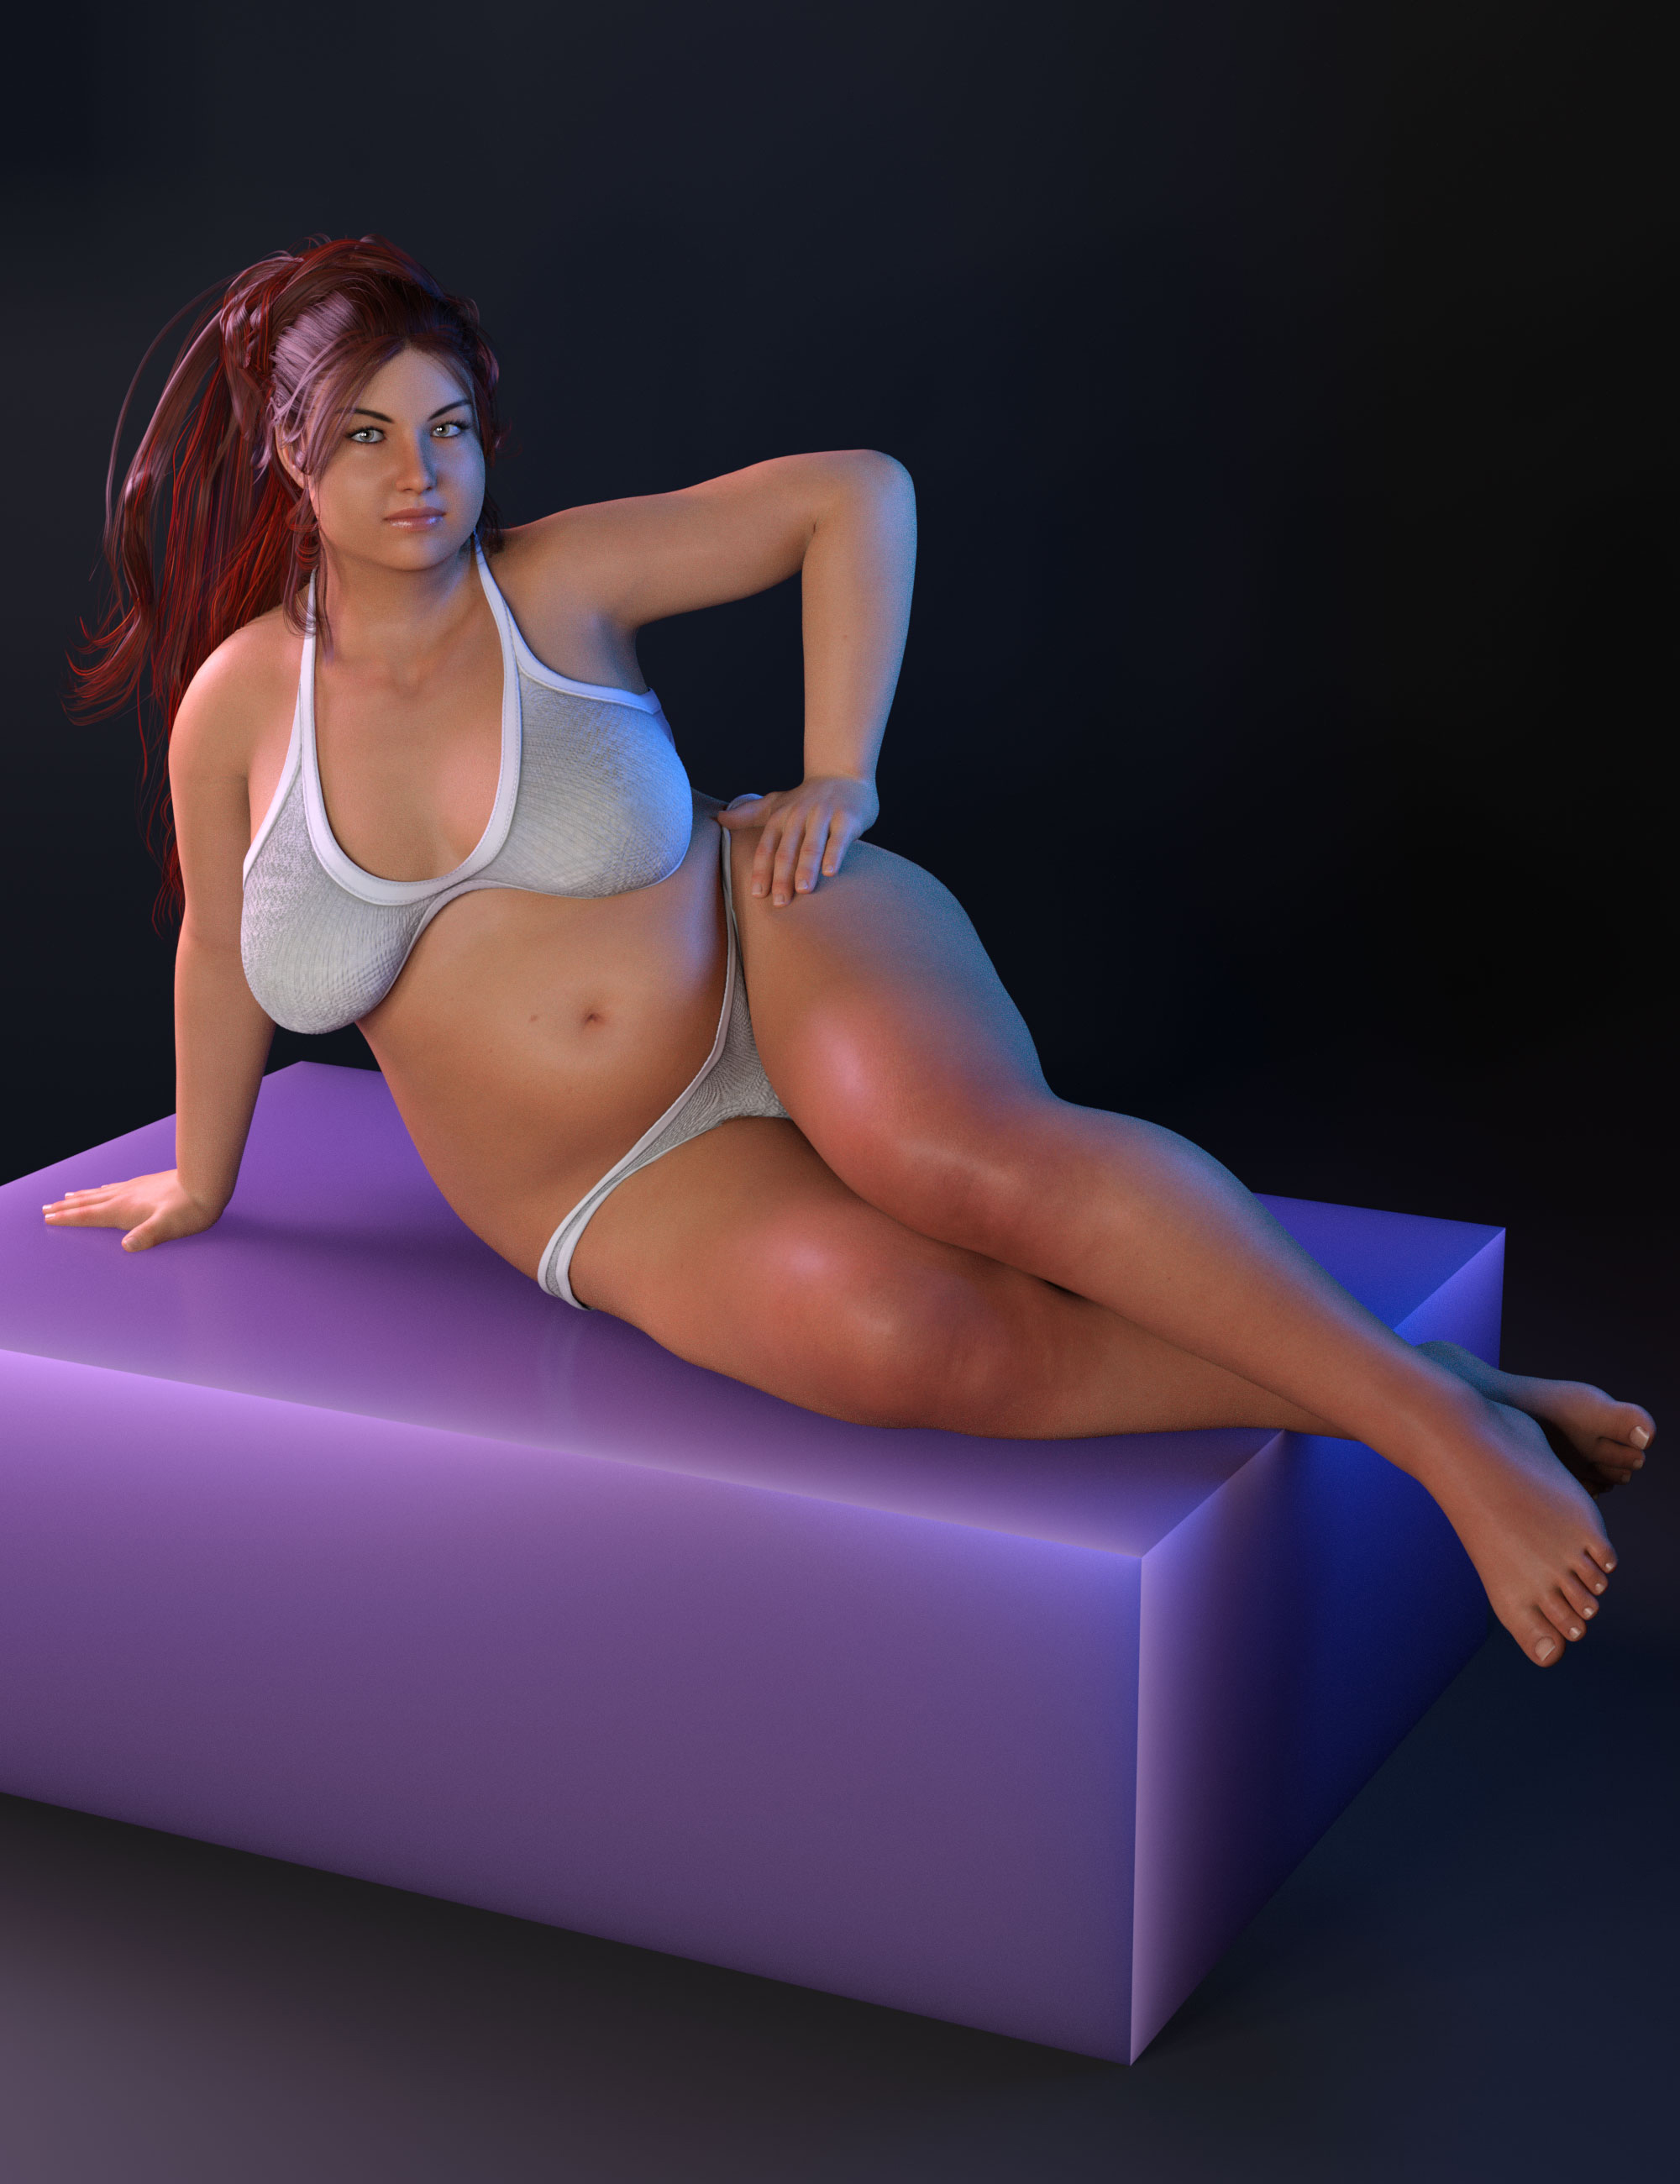 Squishy Human for Genesis 8 and 8.1 Female by: Lyrra MadrilFeralFey, 3D Models by Daz 3D